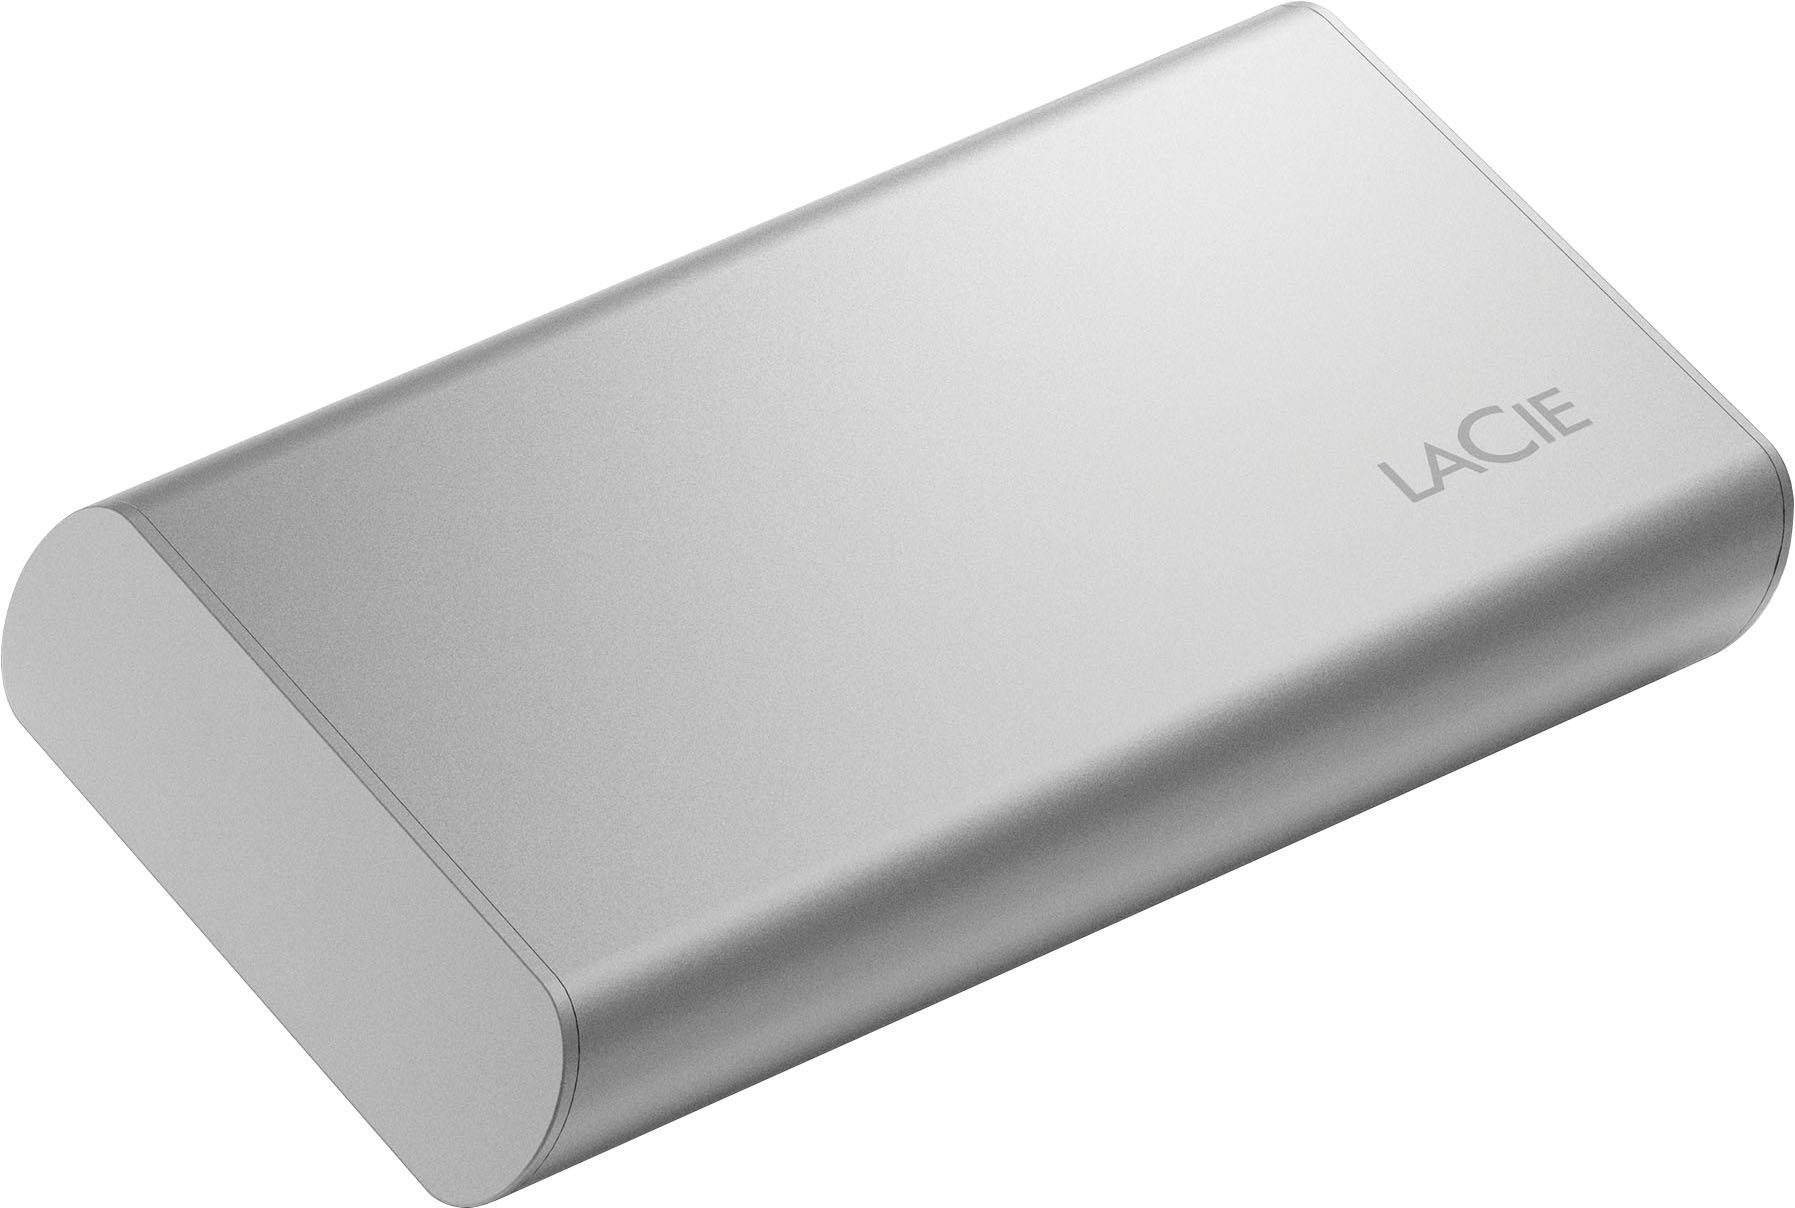 LaCie »Portable SSD 500GB« externe HDD-Festplatte (500 GB) 2,5" online  kaufen | OTTO